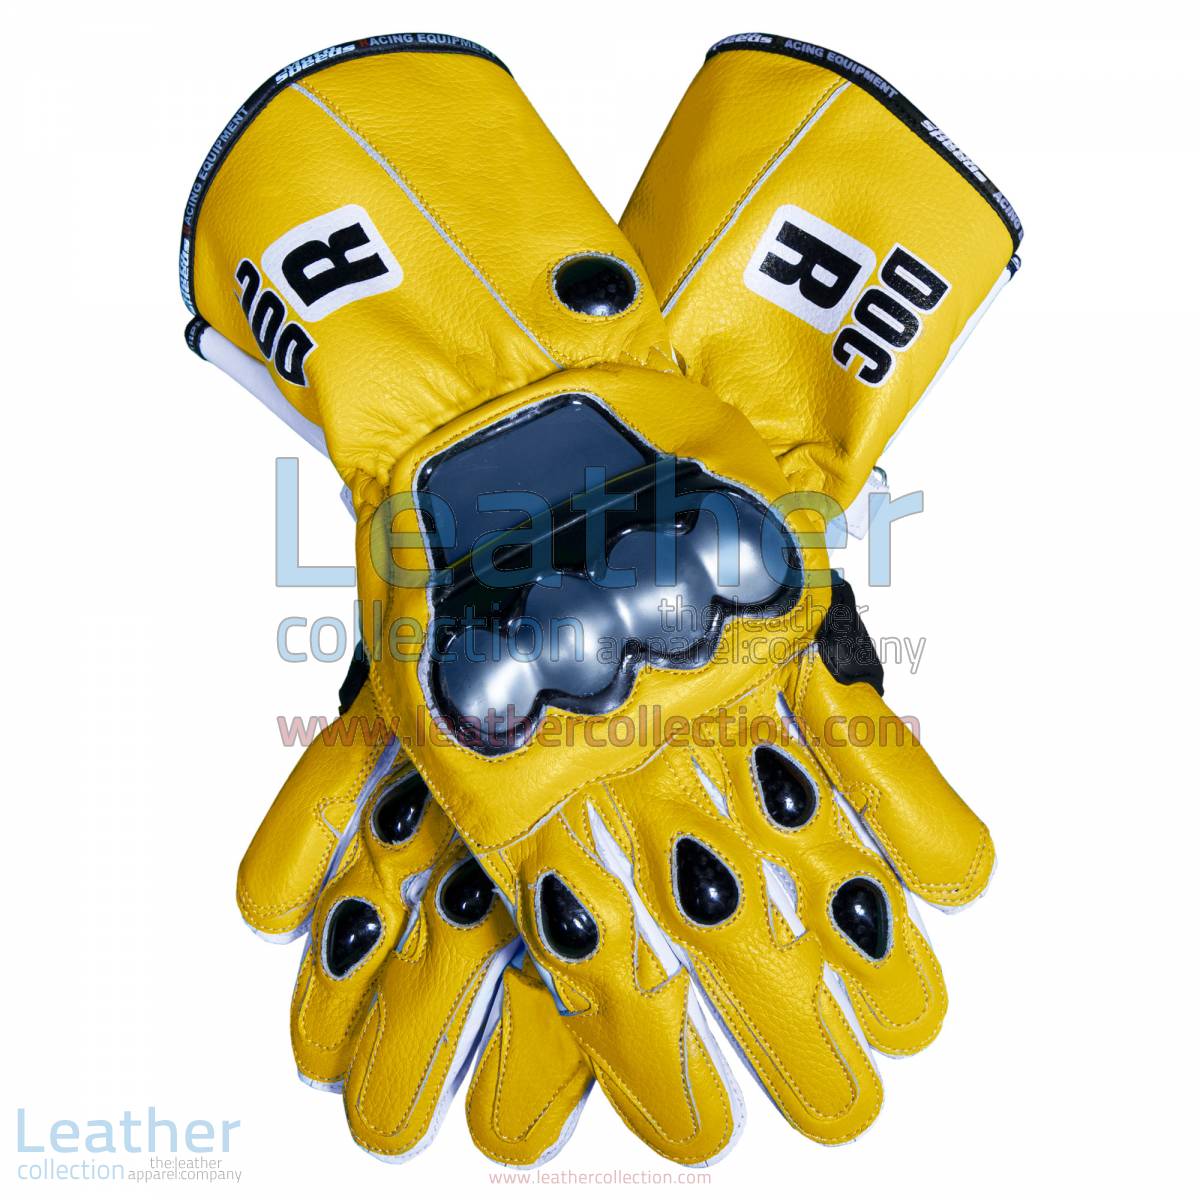 Valentino Rossi Yamaha MotoGP 2006 Racing Gloves